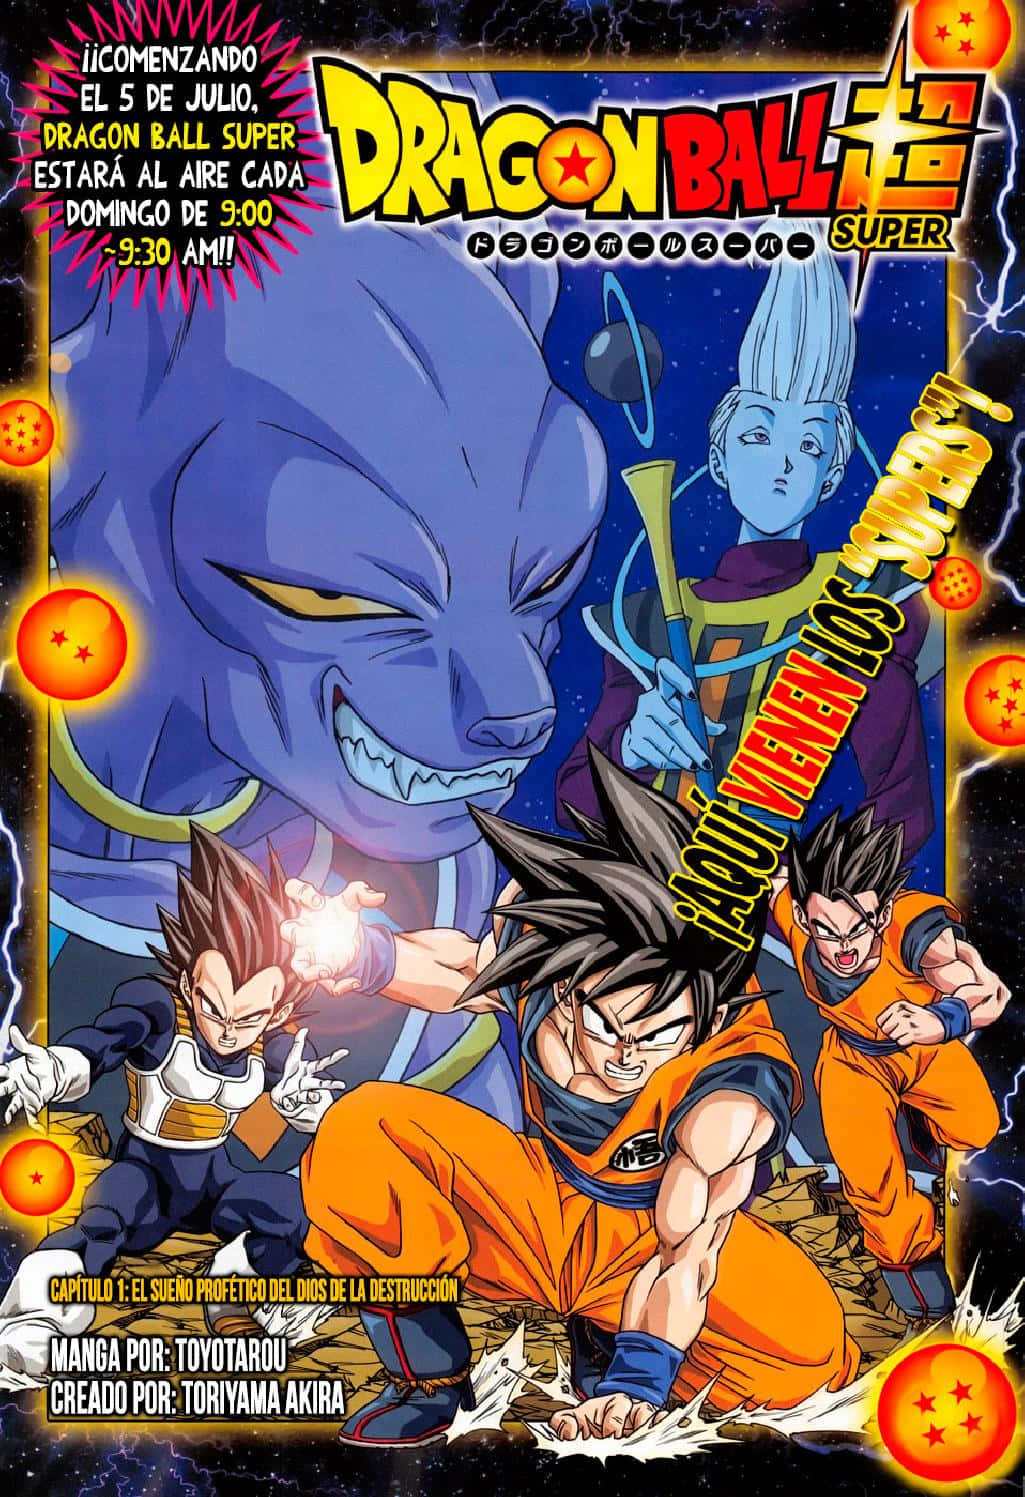 A Shocking Reunion between Old Rivals - Son Goku&Vegeta in the Dragon Ball Super Manga Wallpaper